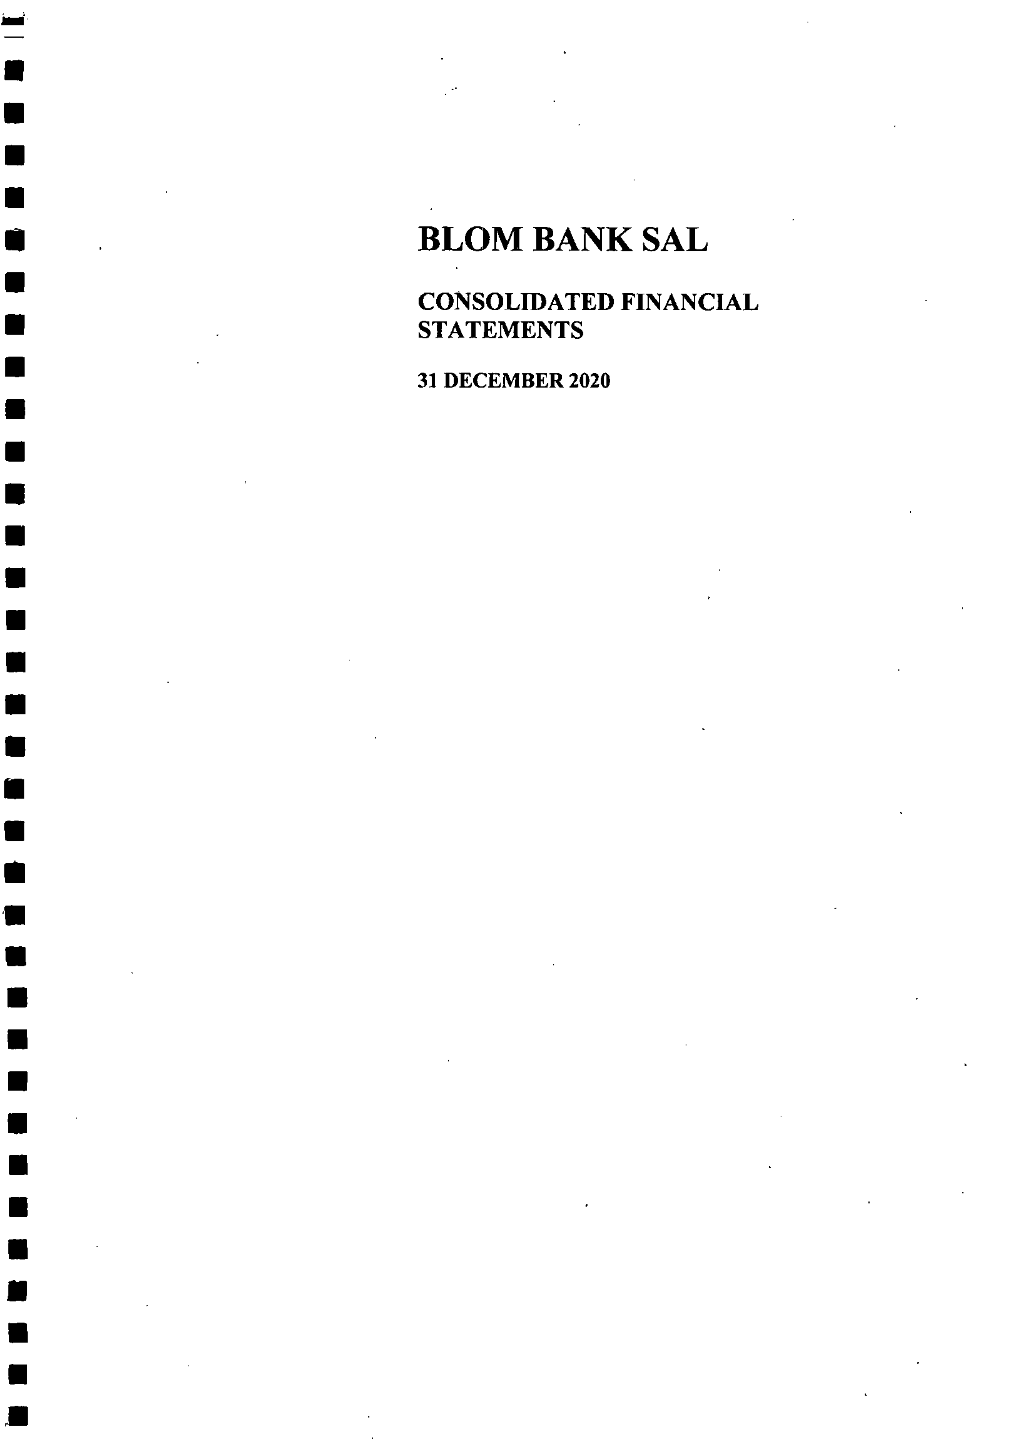 Blom Bank Sal